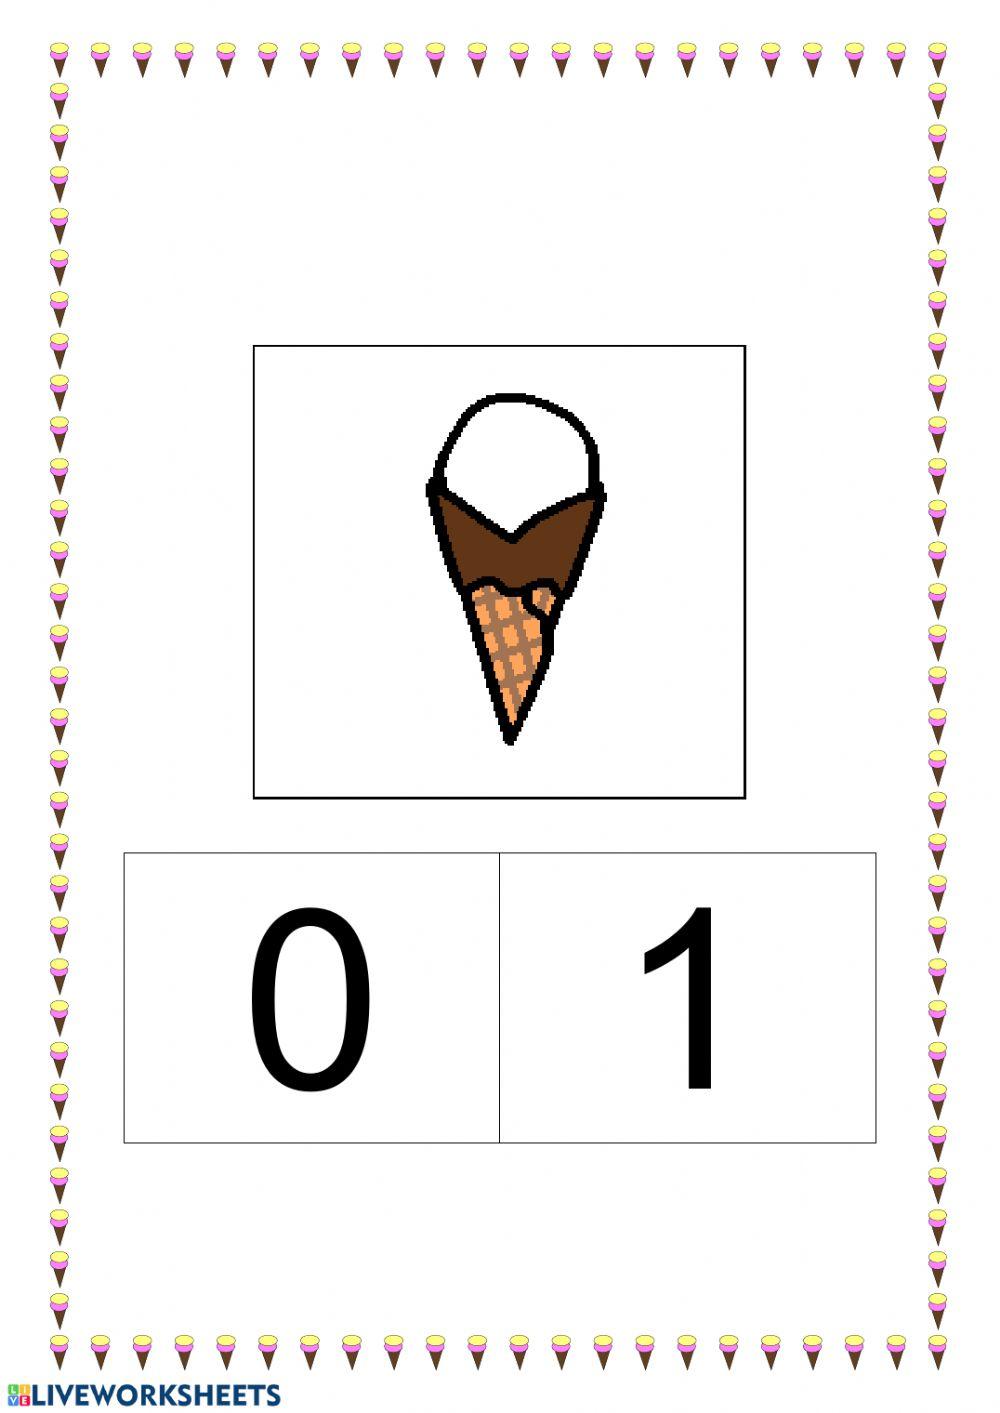 Quanti gelati sono?